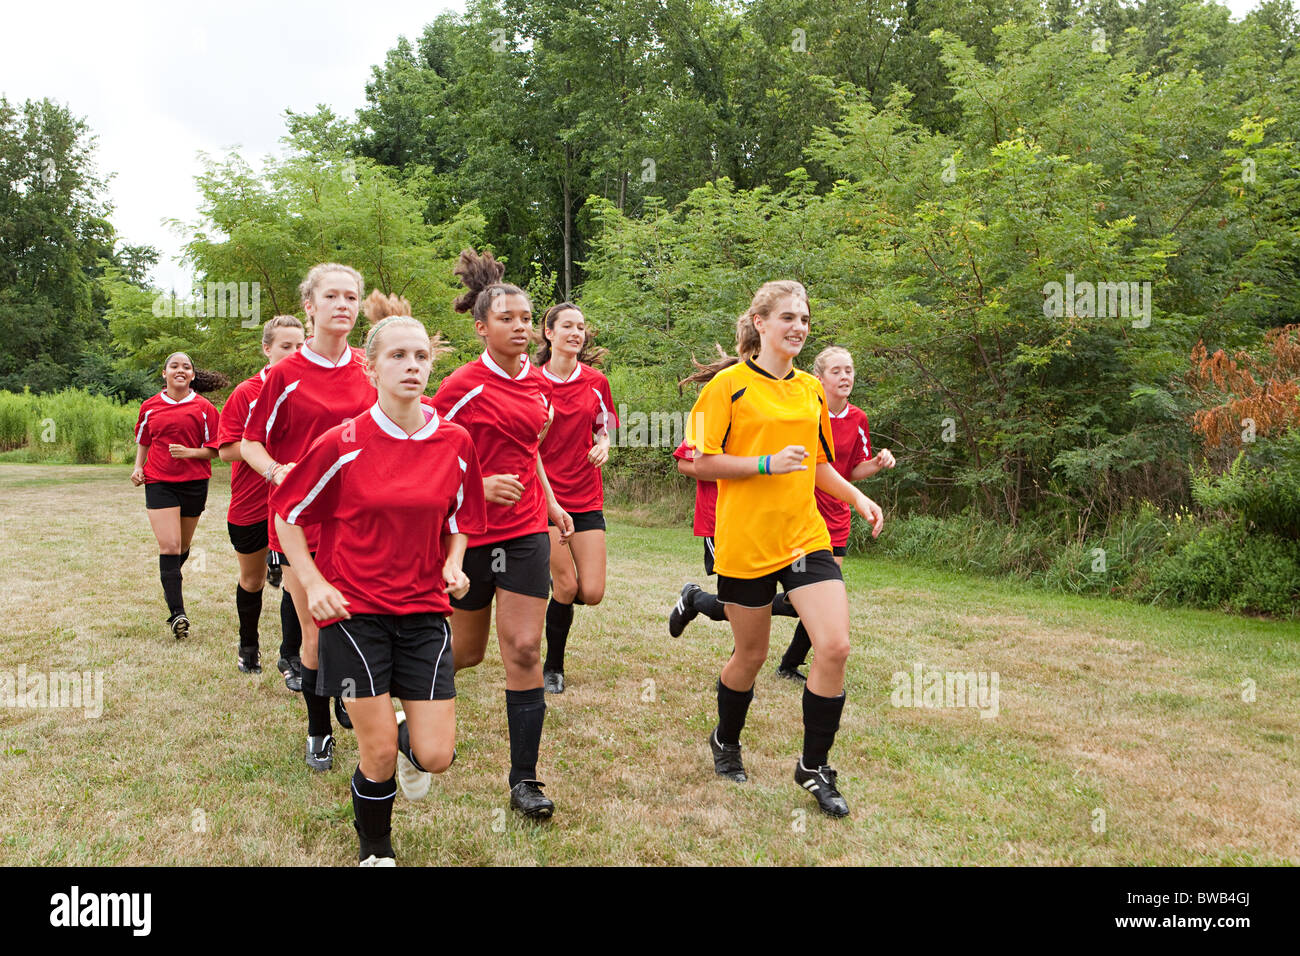 Girl soccer players running Stock Photo